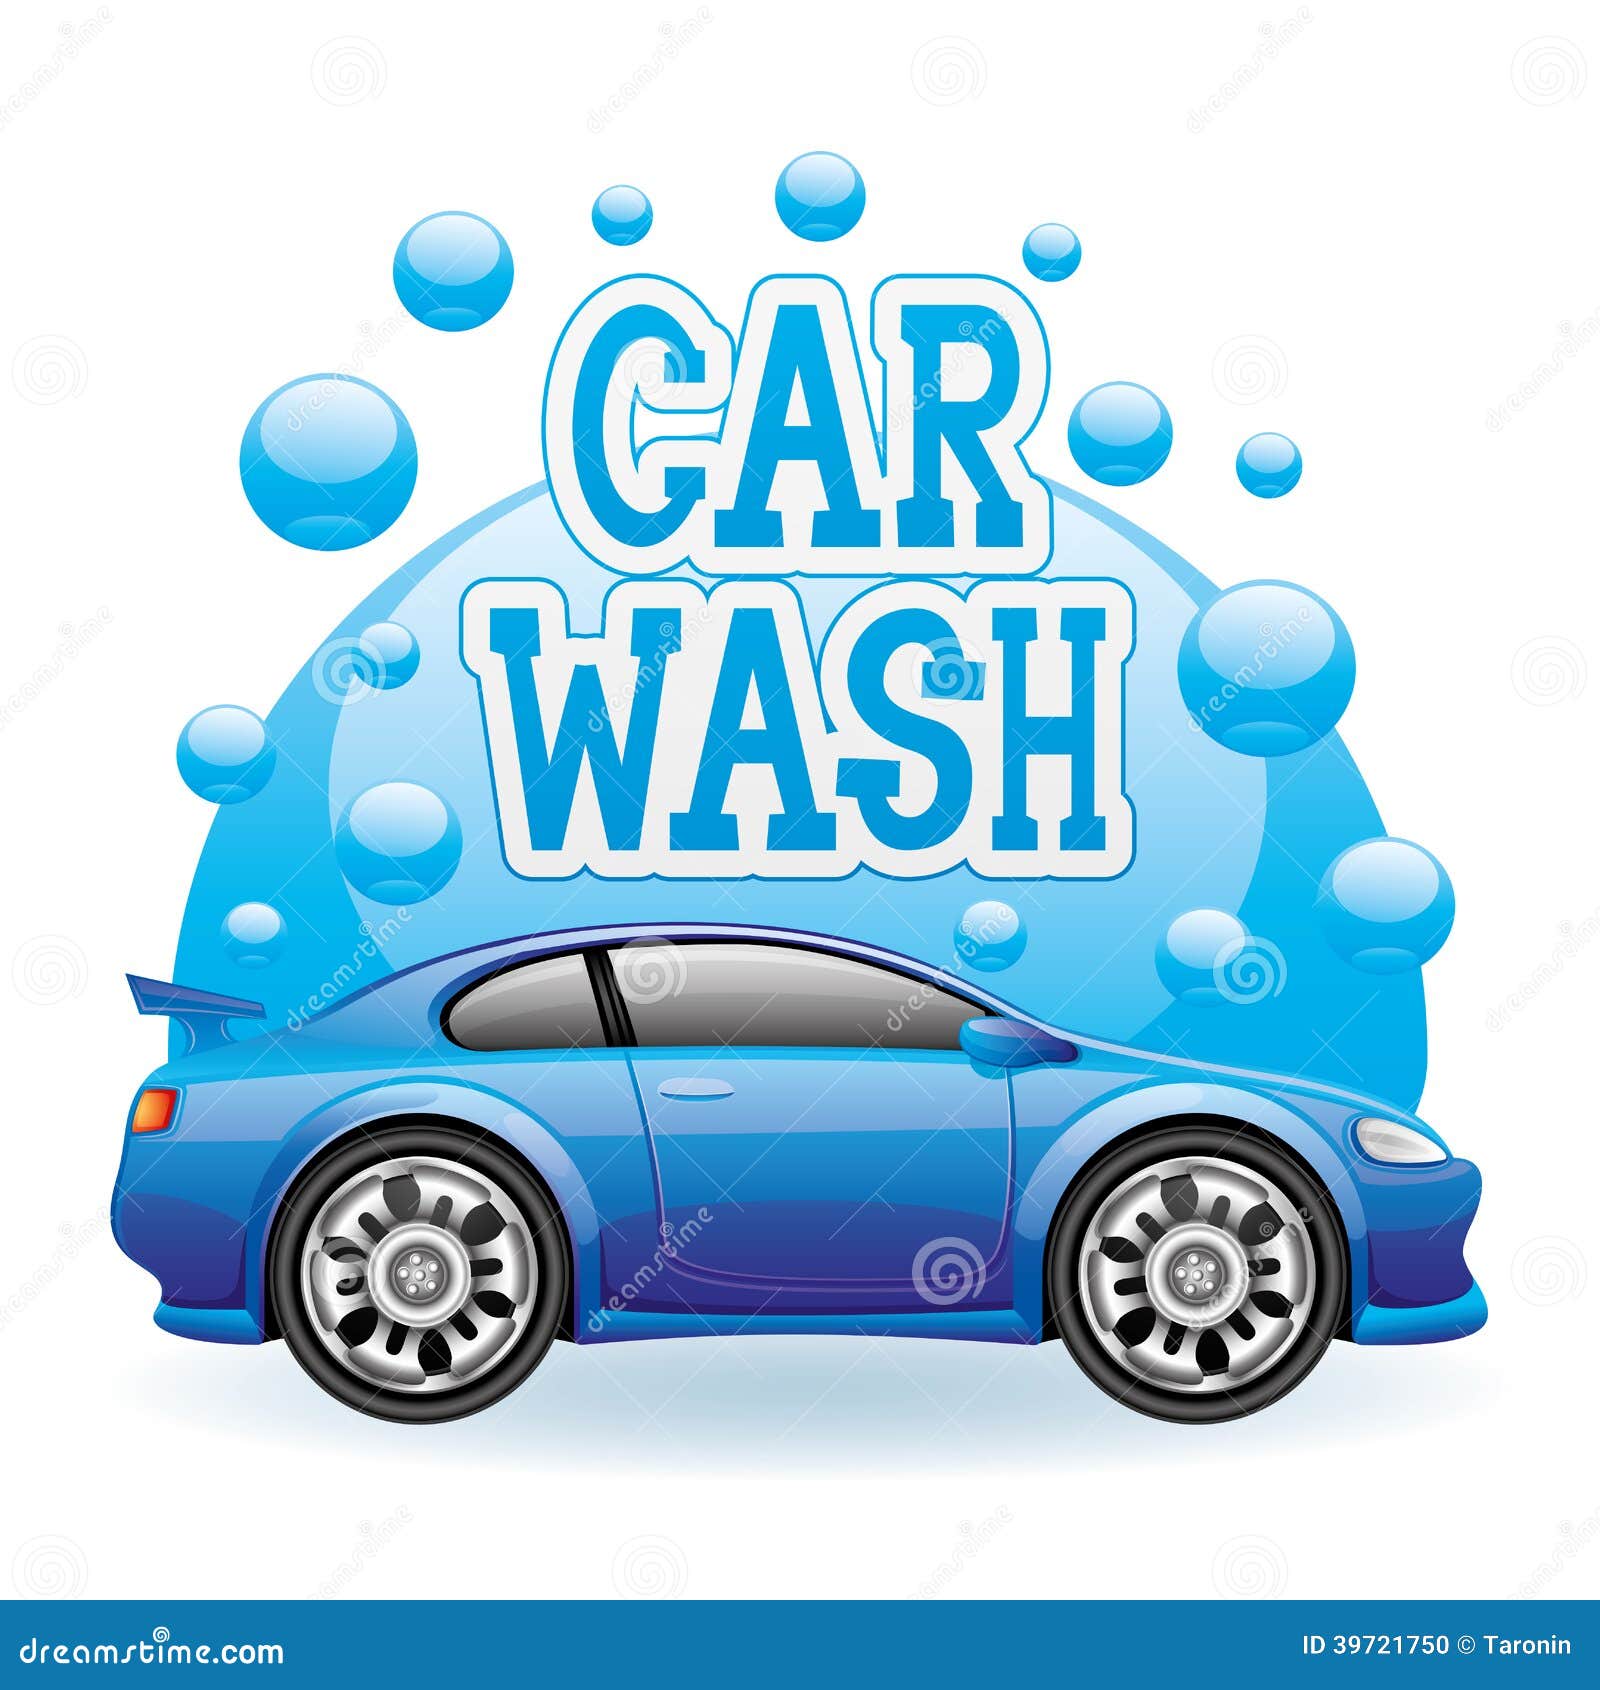 free vector car wash clipart - photo #38